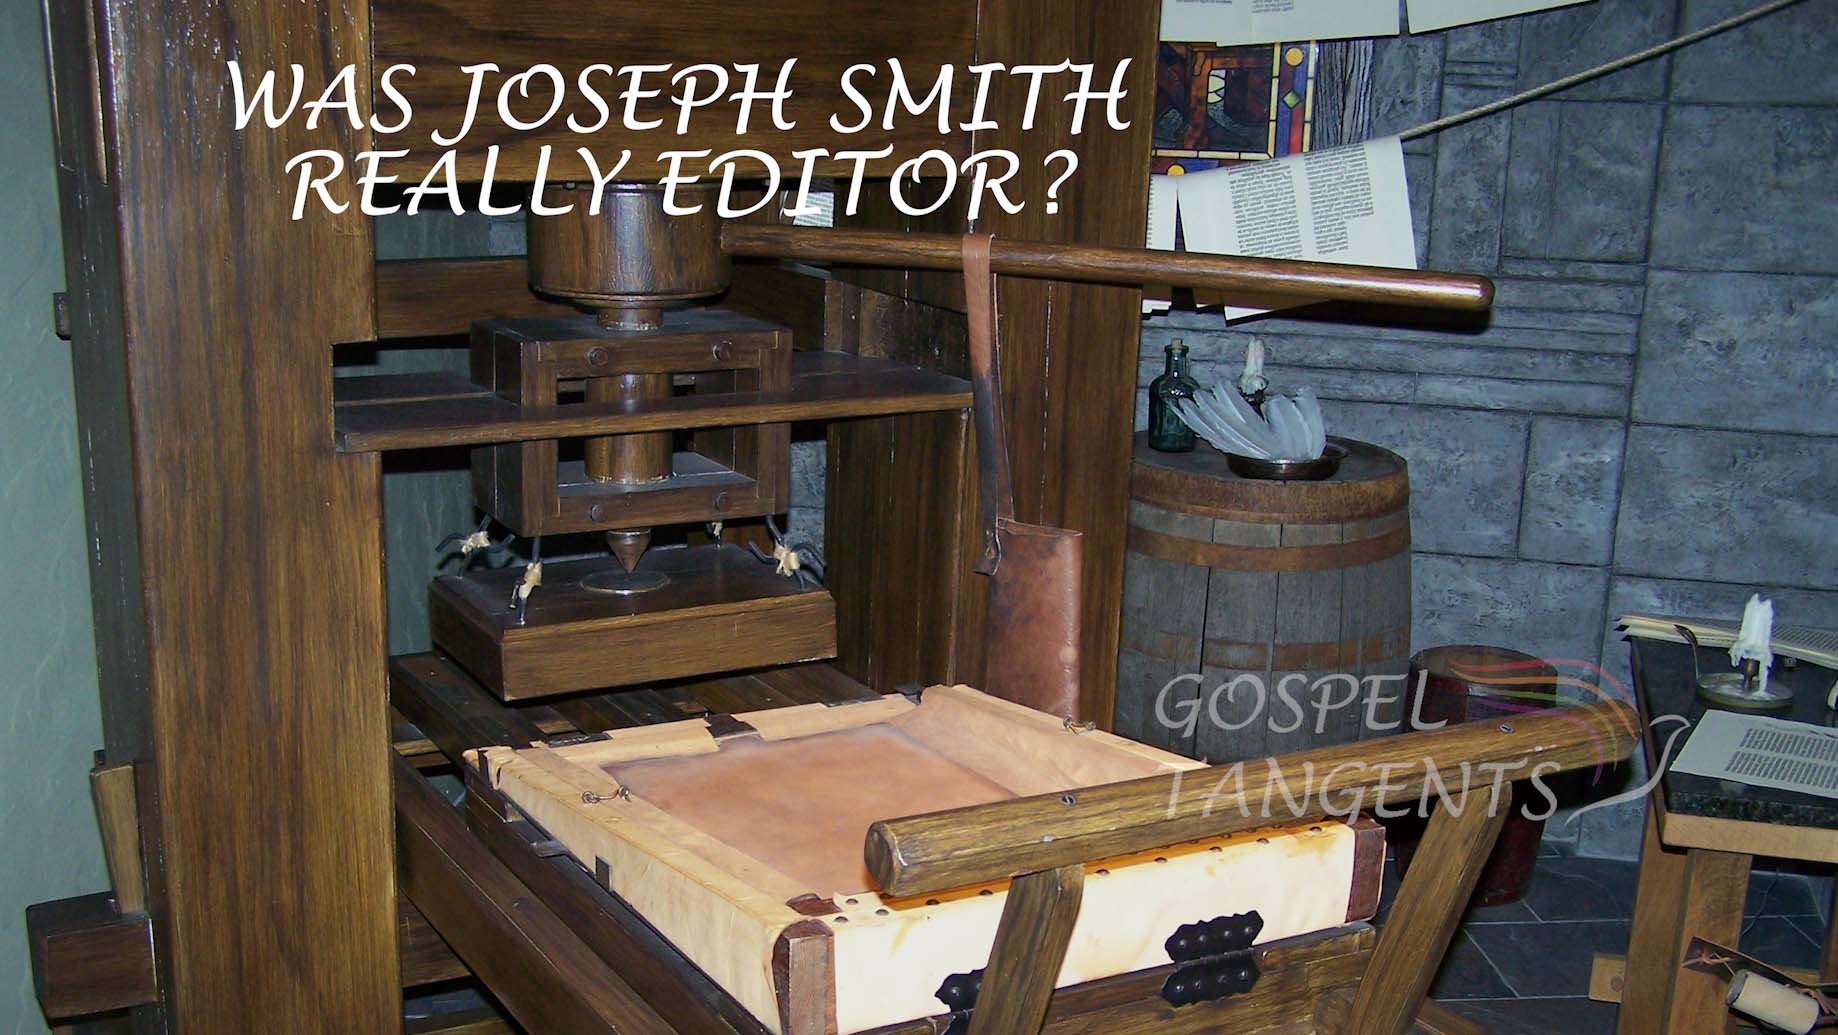 Joseph Smith editor - Was Joseph Smith Really Editor? (Part 2 of 11) - Mormon History Podcast